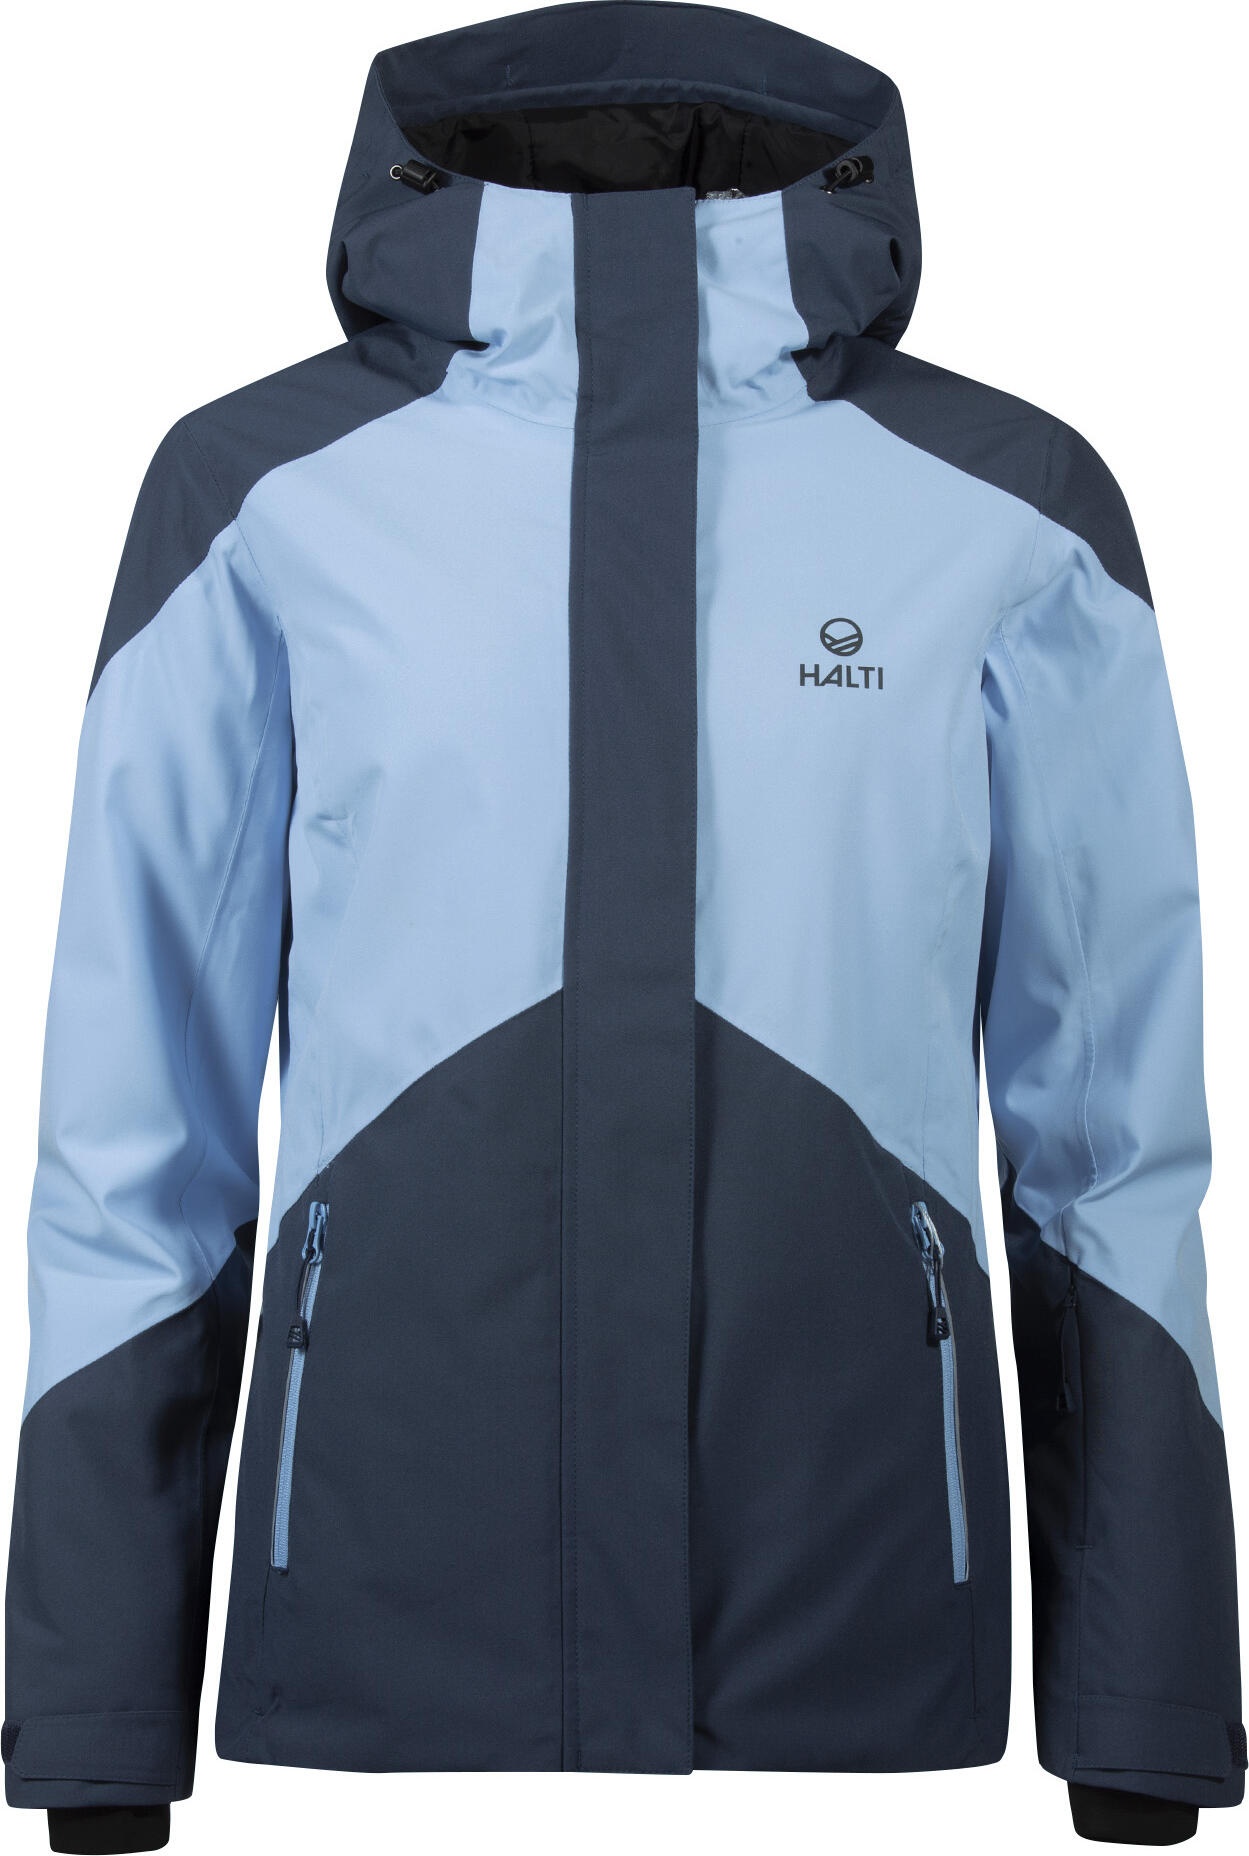 Halti Corinne W DX Ski Jacket placid blue (A32) 46